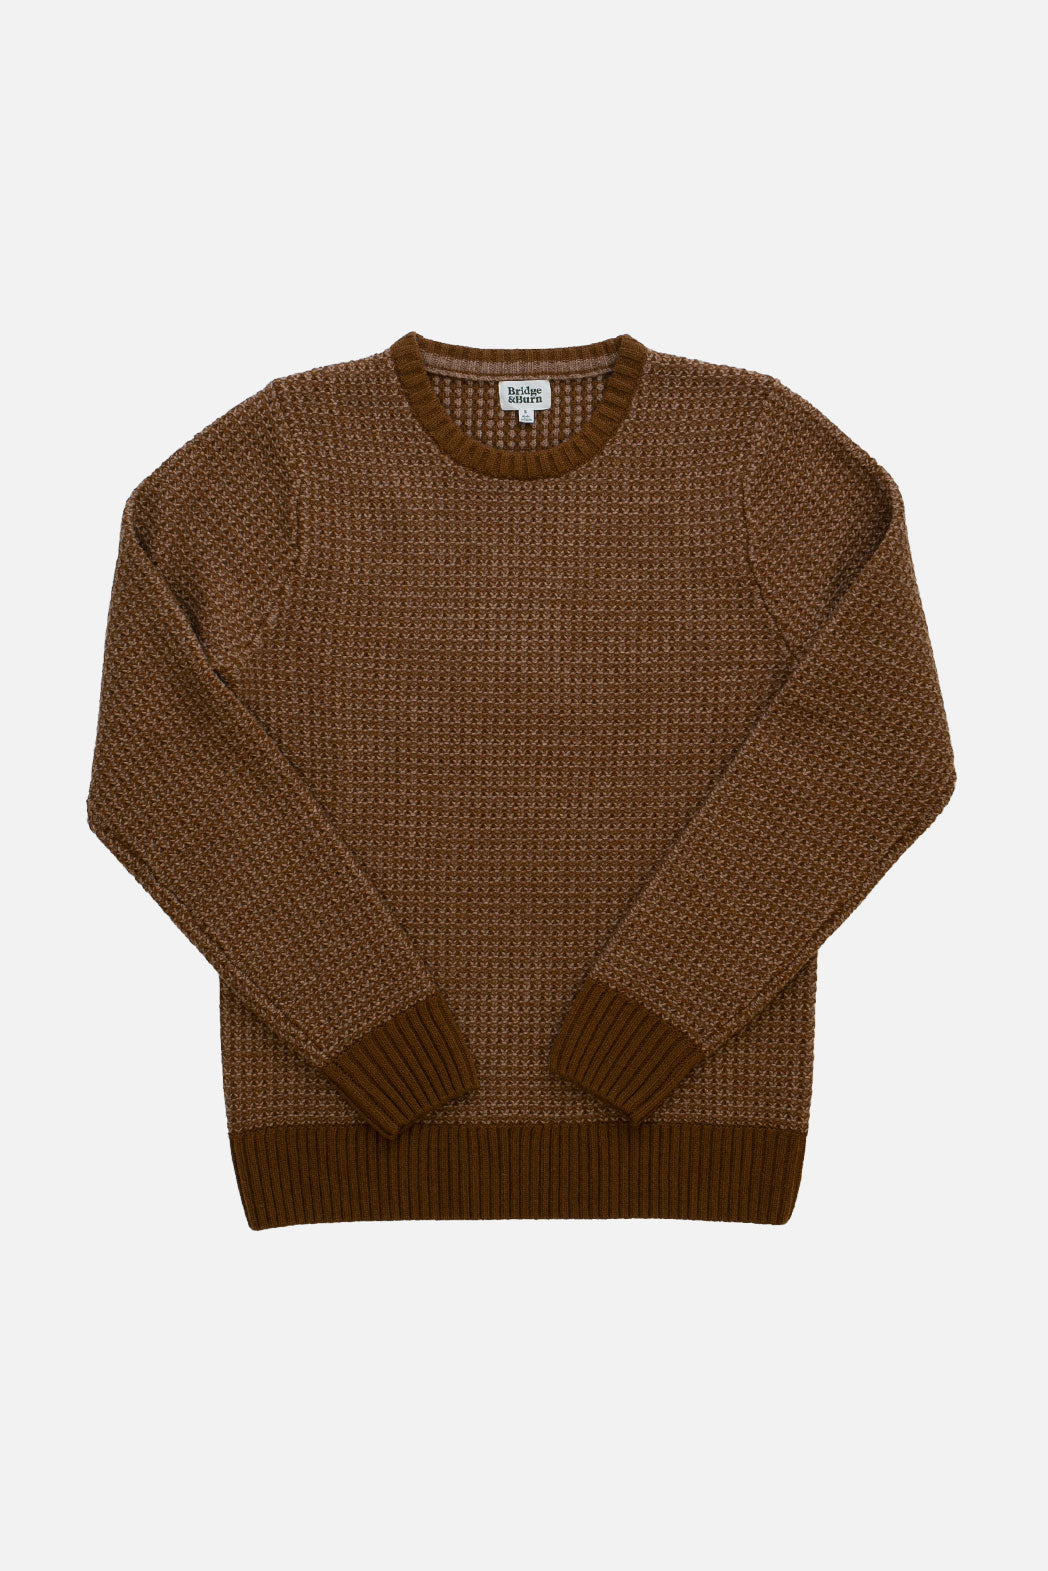 Chelan Sweater / Dark Ochre